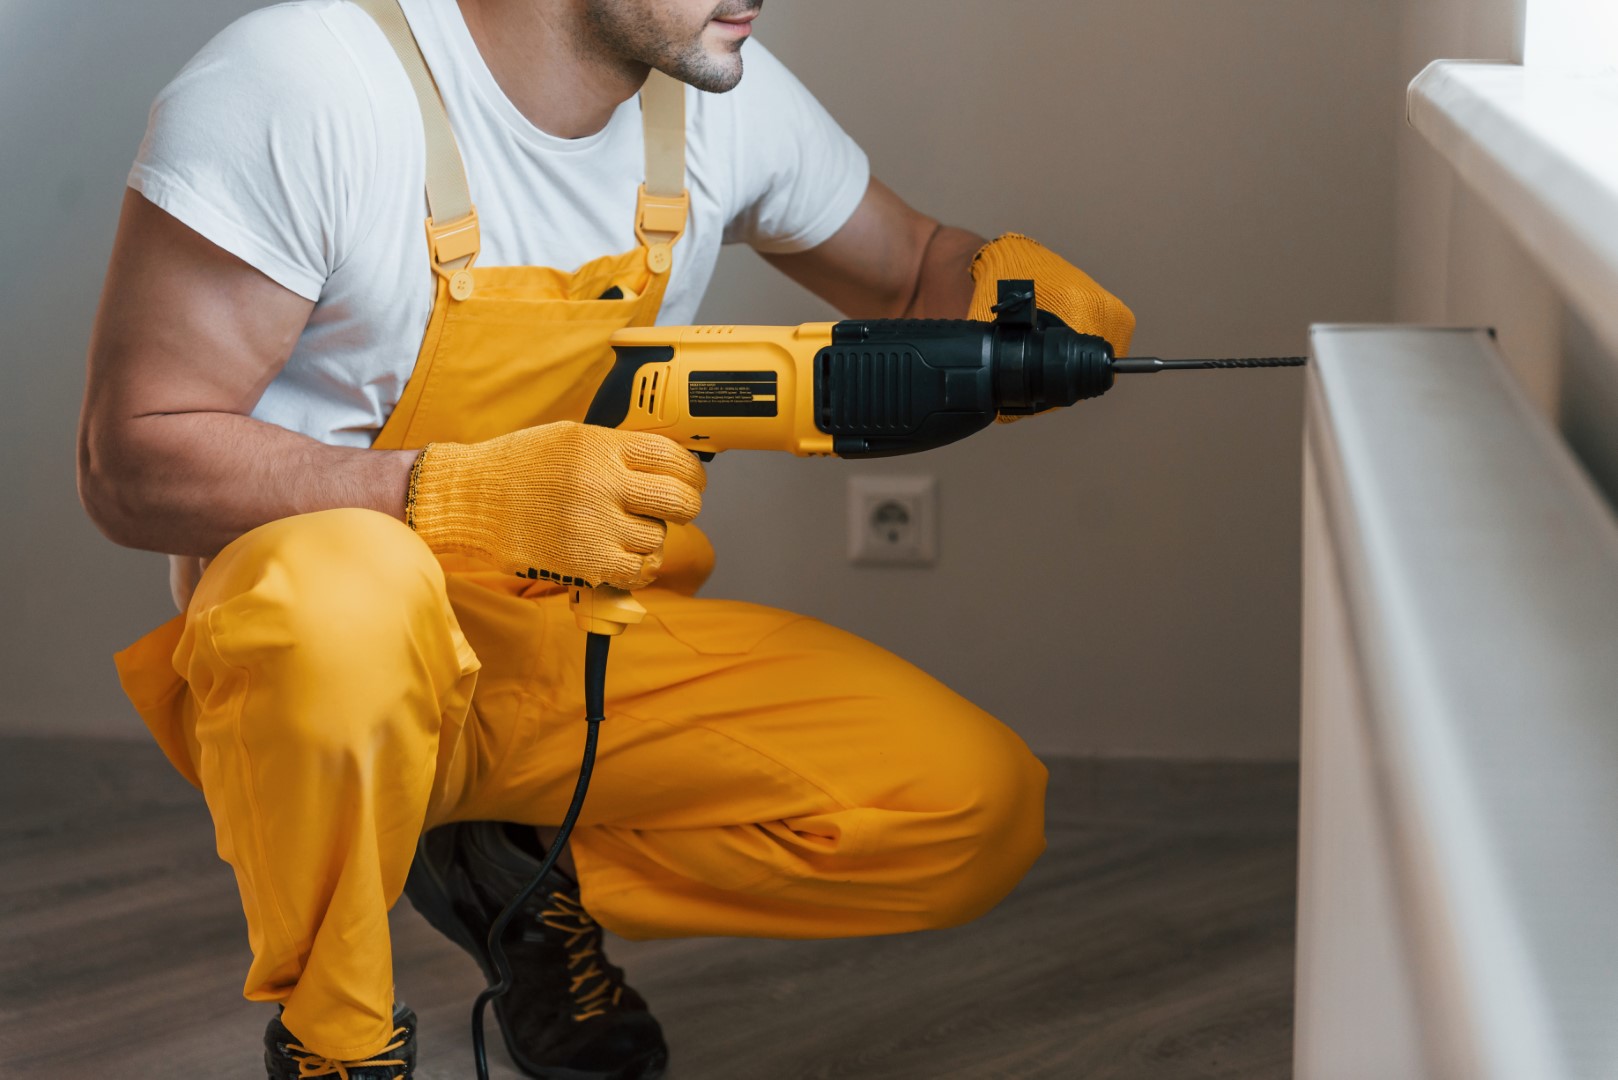 Handyman In Yellow Uniform Works With Drill Indoor 2021 09 01 02 49 46 Utc